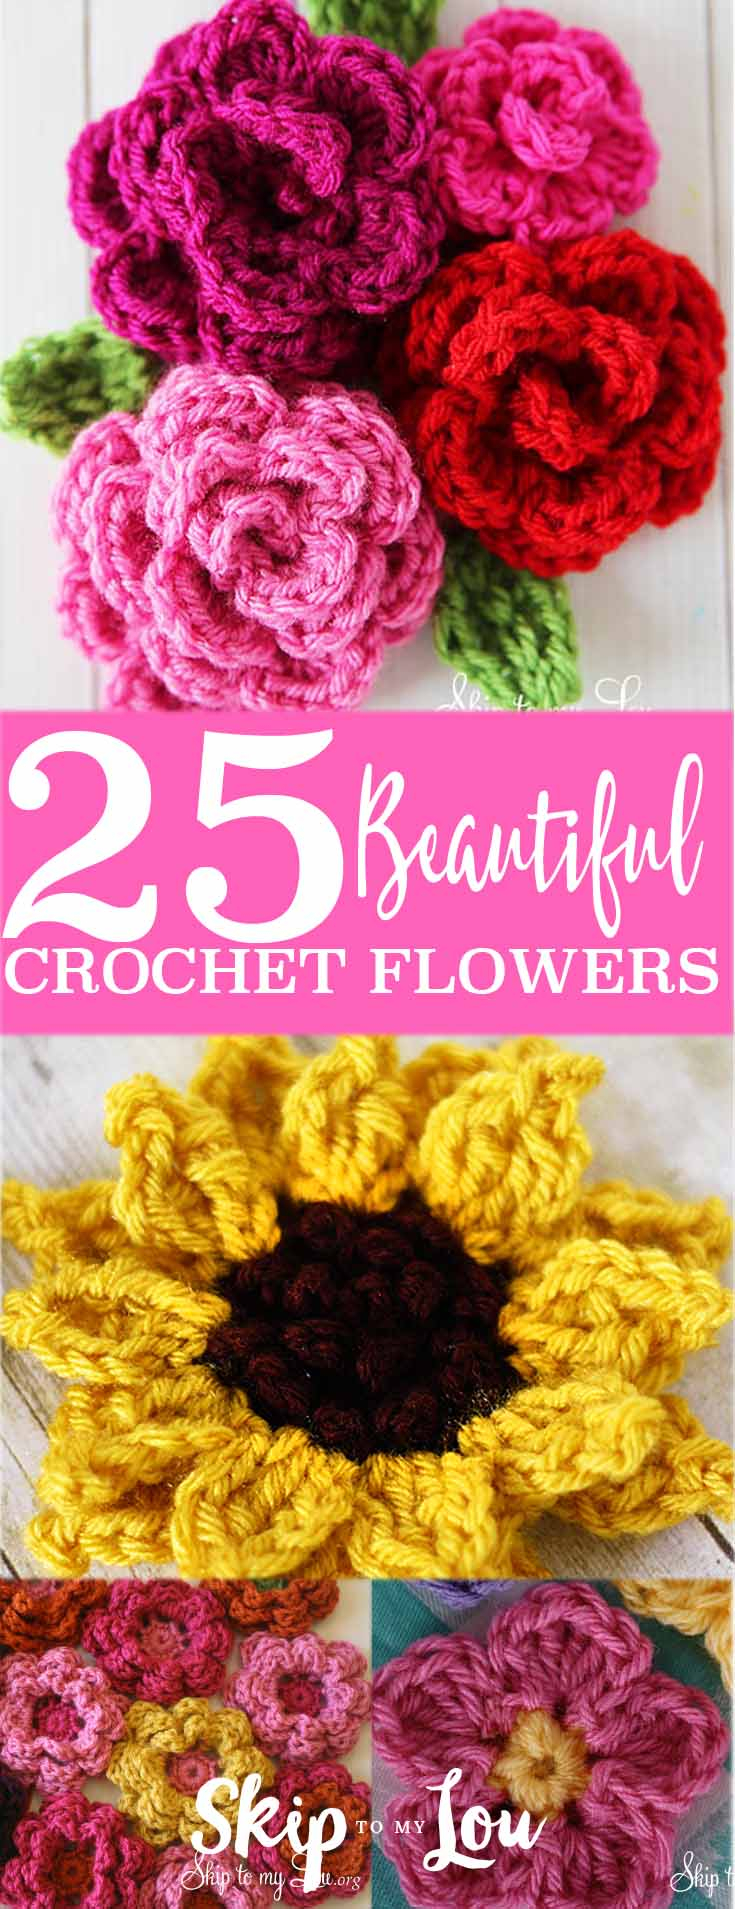 Crochet Rose Pattern 10 Beautiful Crochet Flowers To Make Skip To My Lou